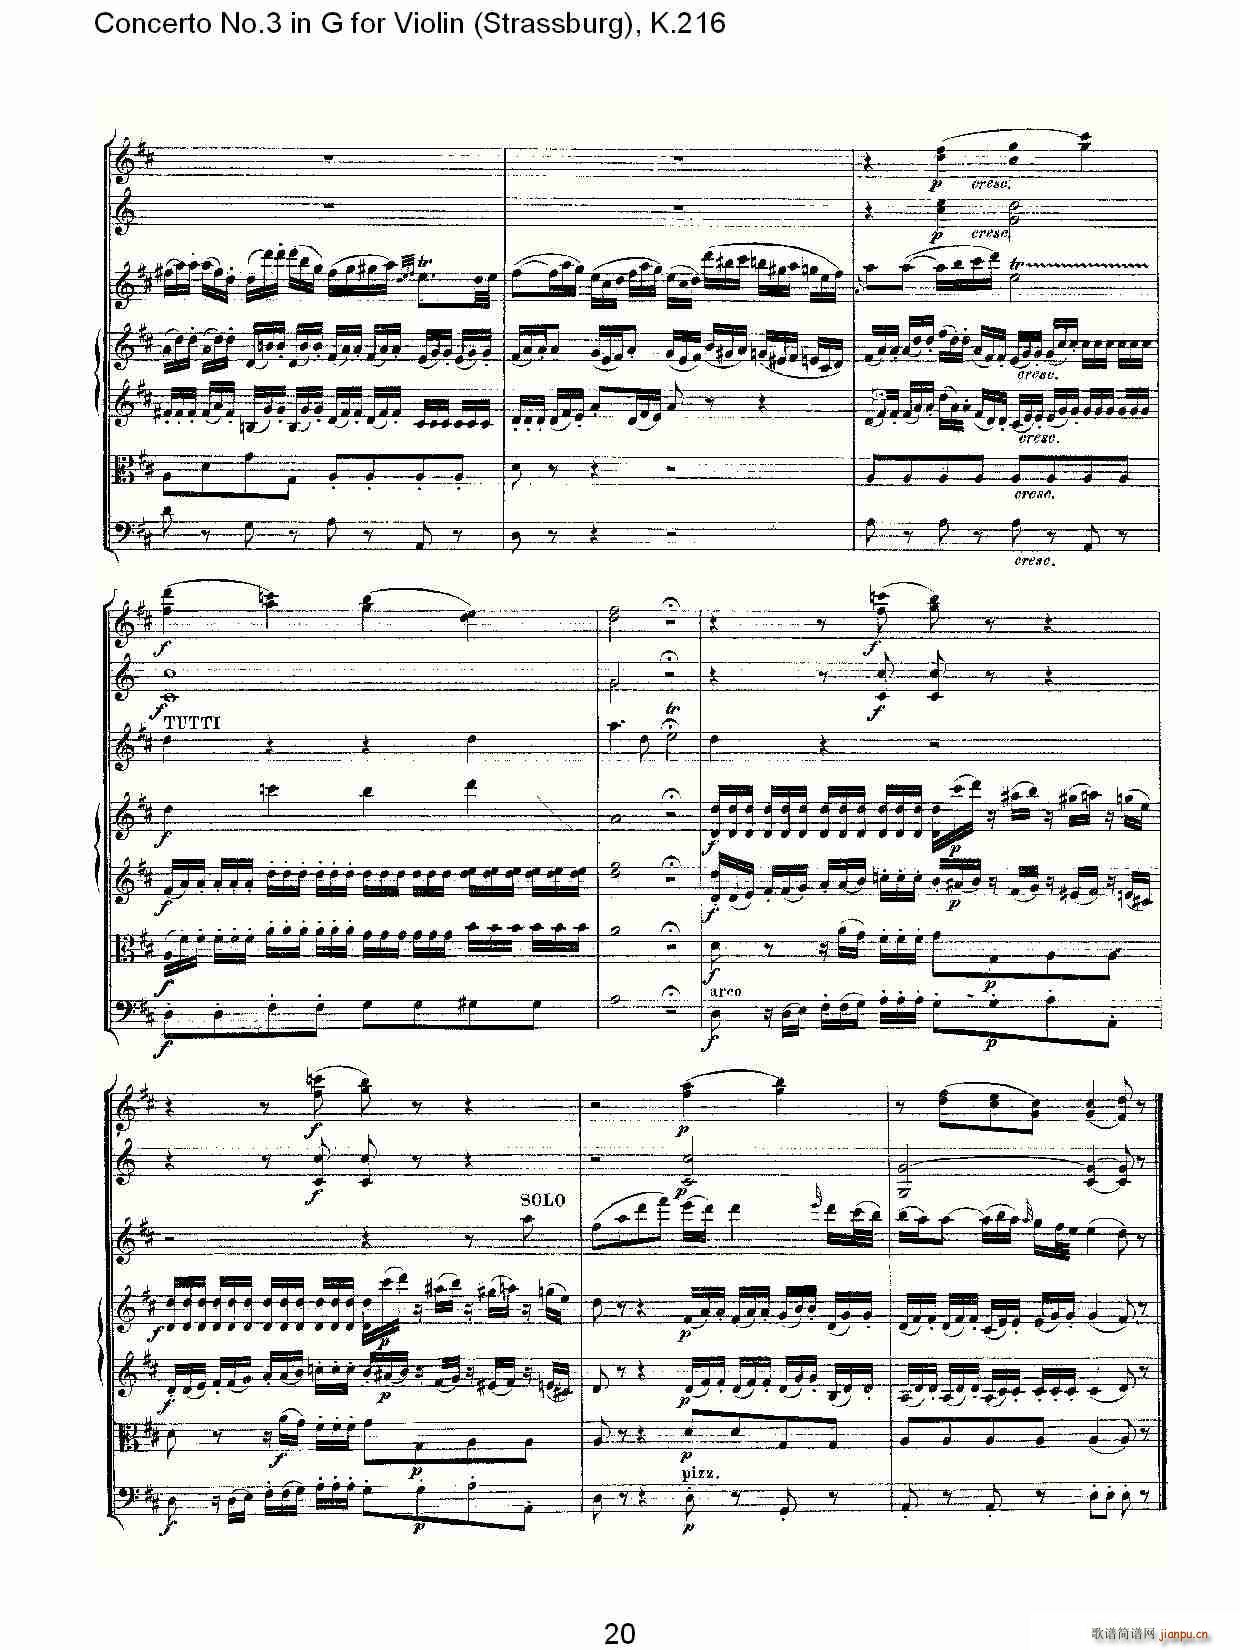 Concerto No.3 in G for Violin K.216(С)20